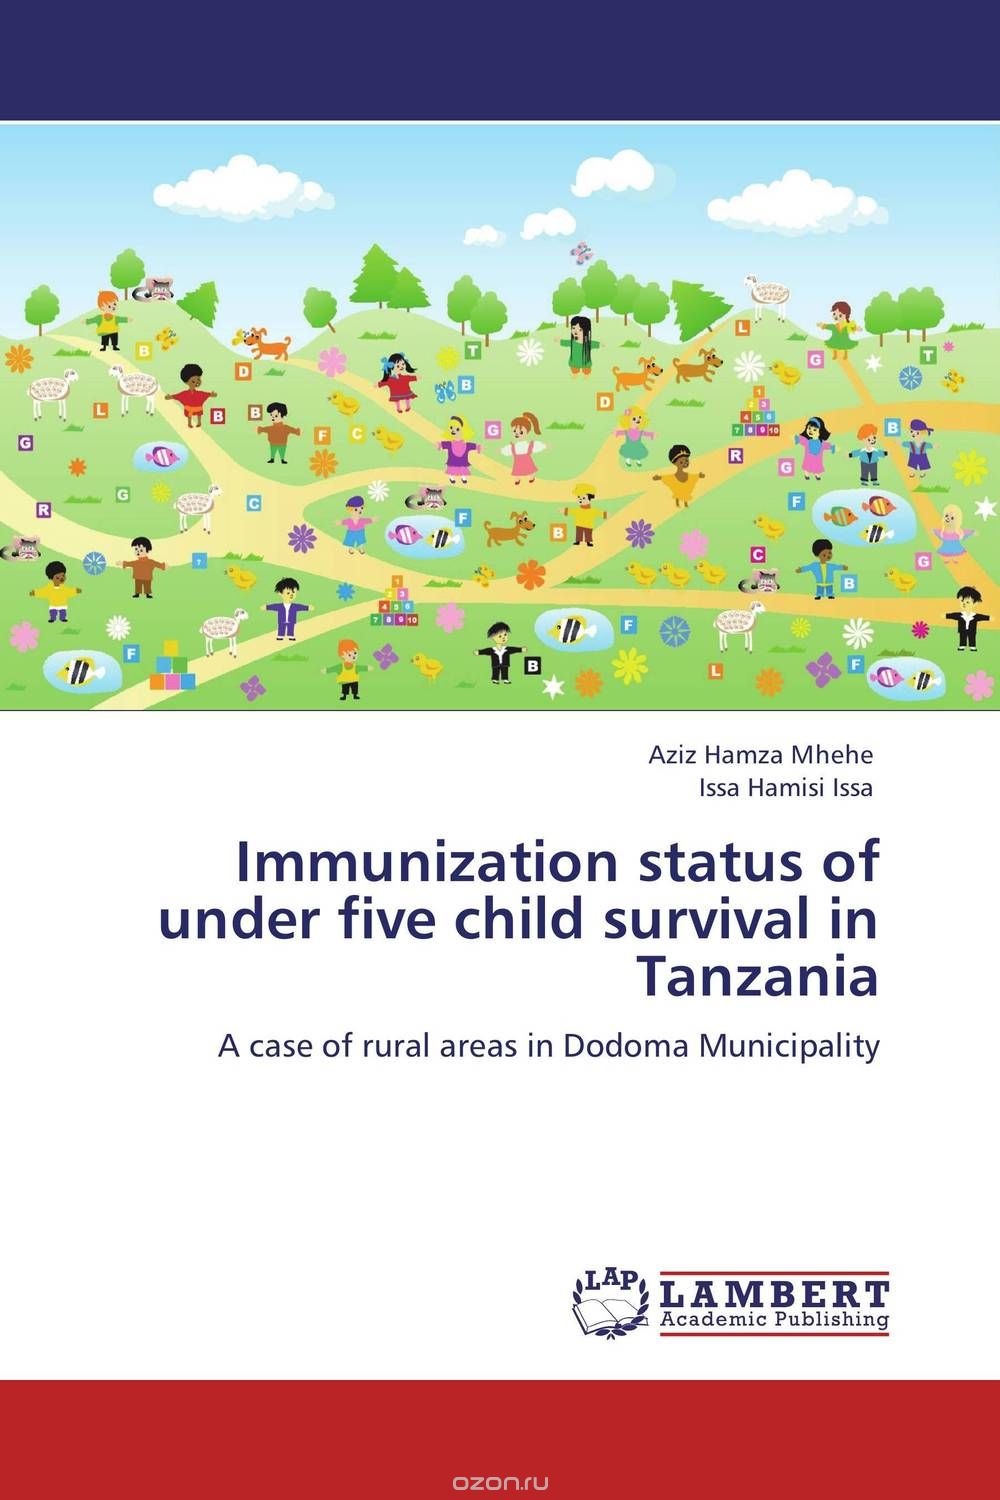 Скачать книгу "Immunization status of under five child survival in Tanzania"